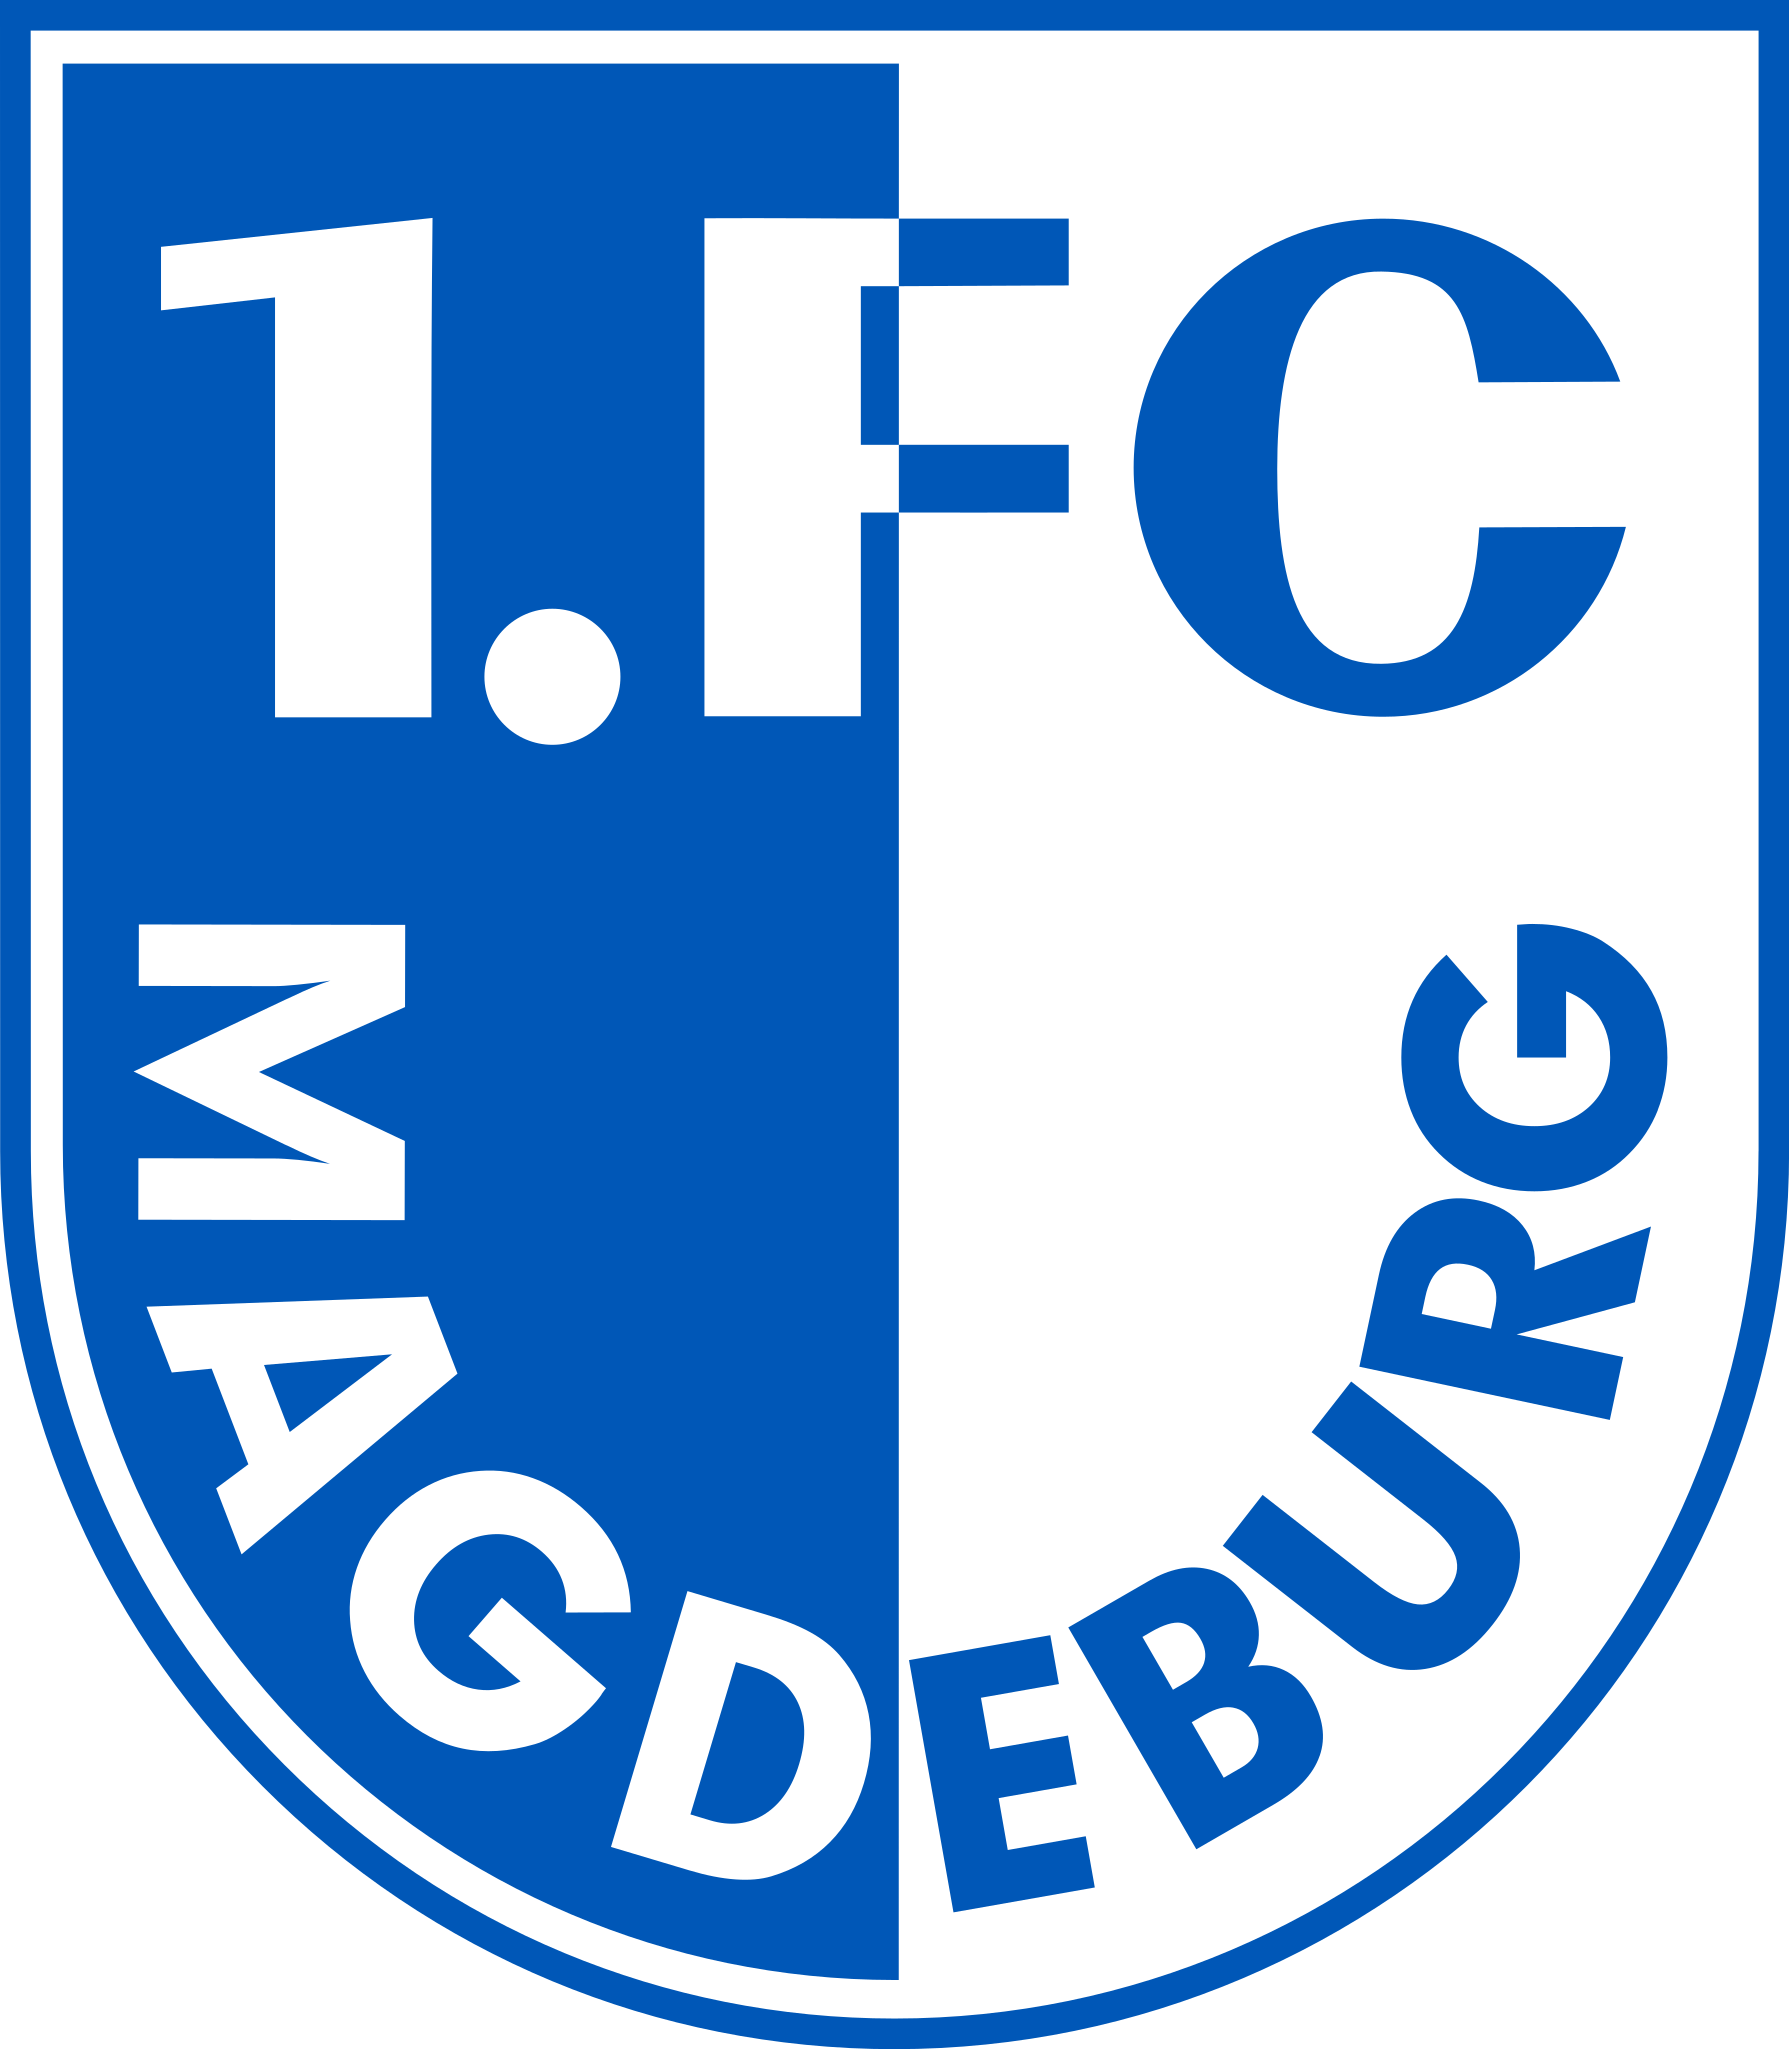 File:MCM logo.svg - Wikipedia